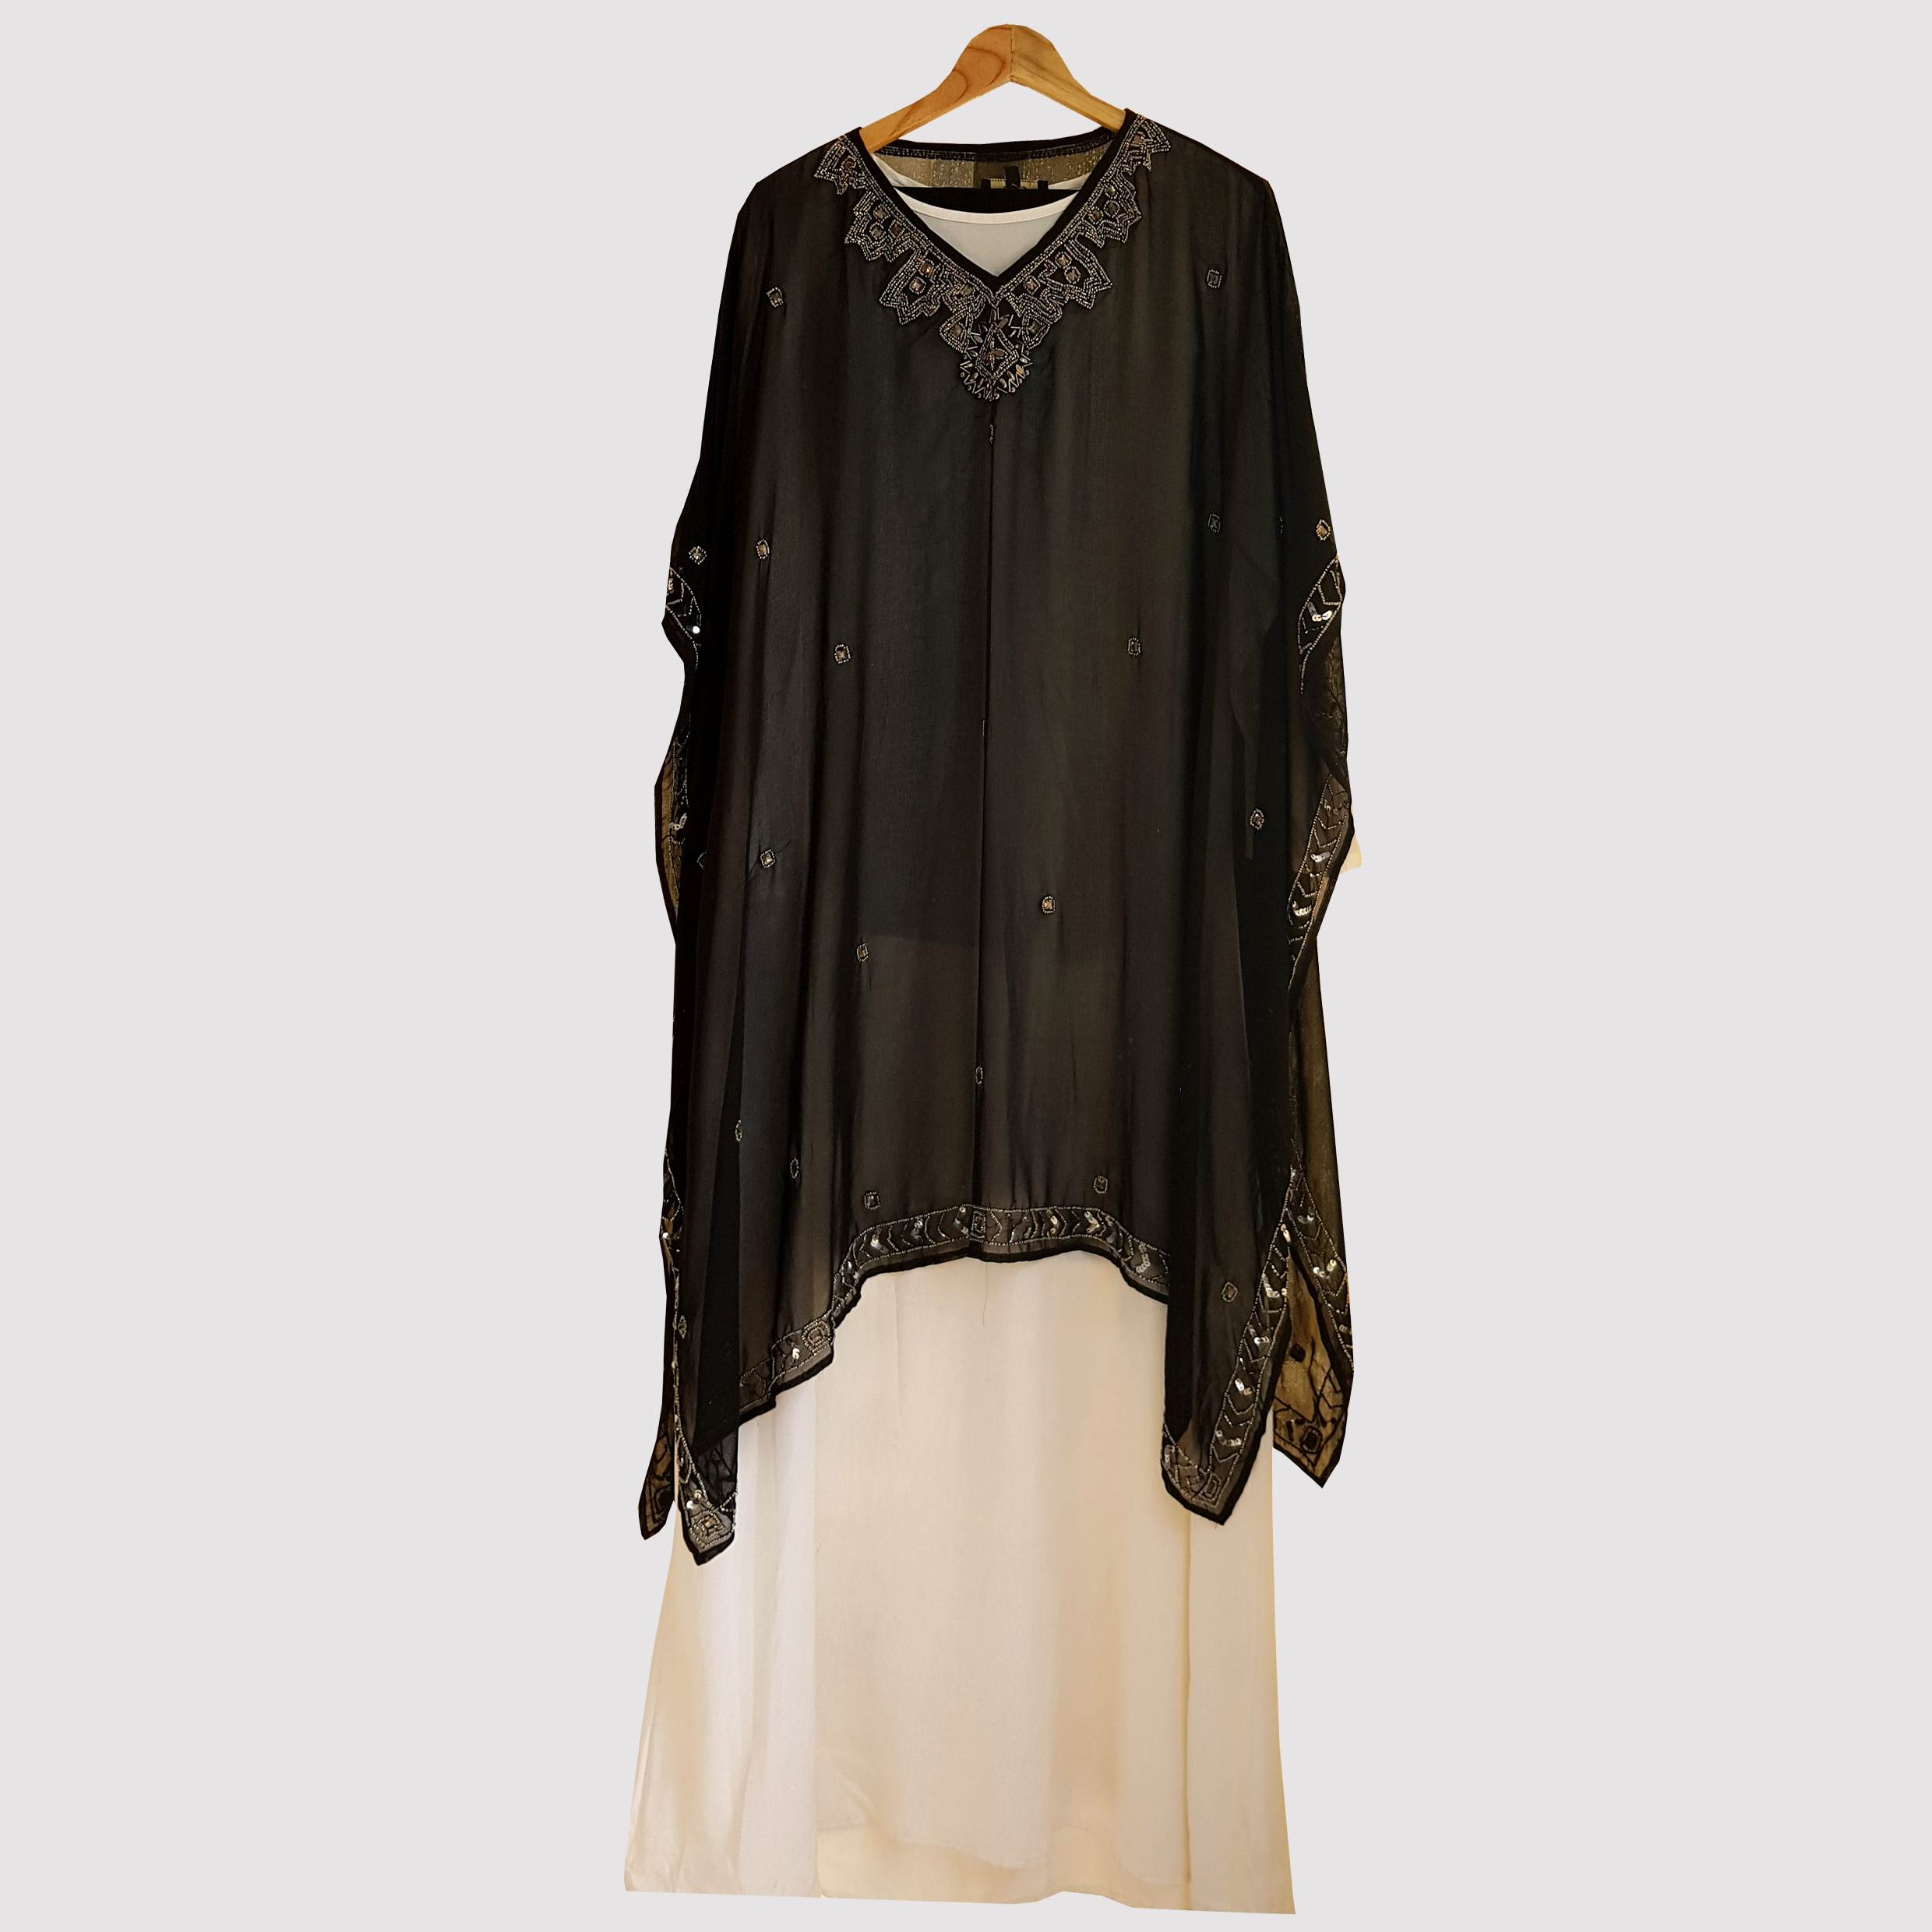 Black and White Detailed Abaya